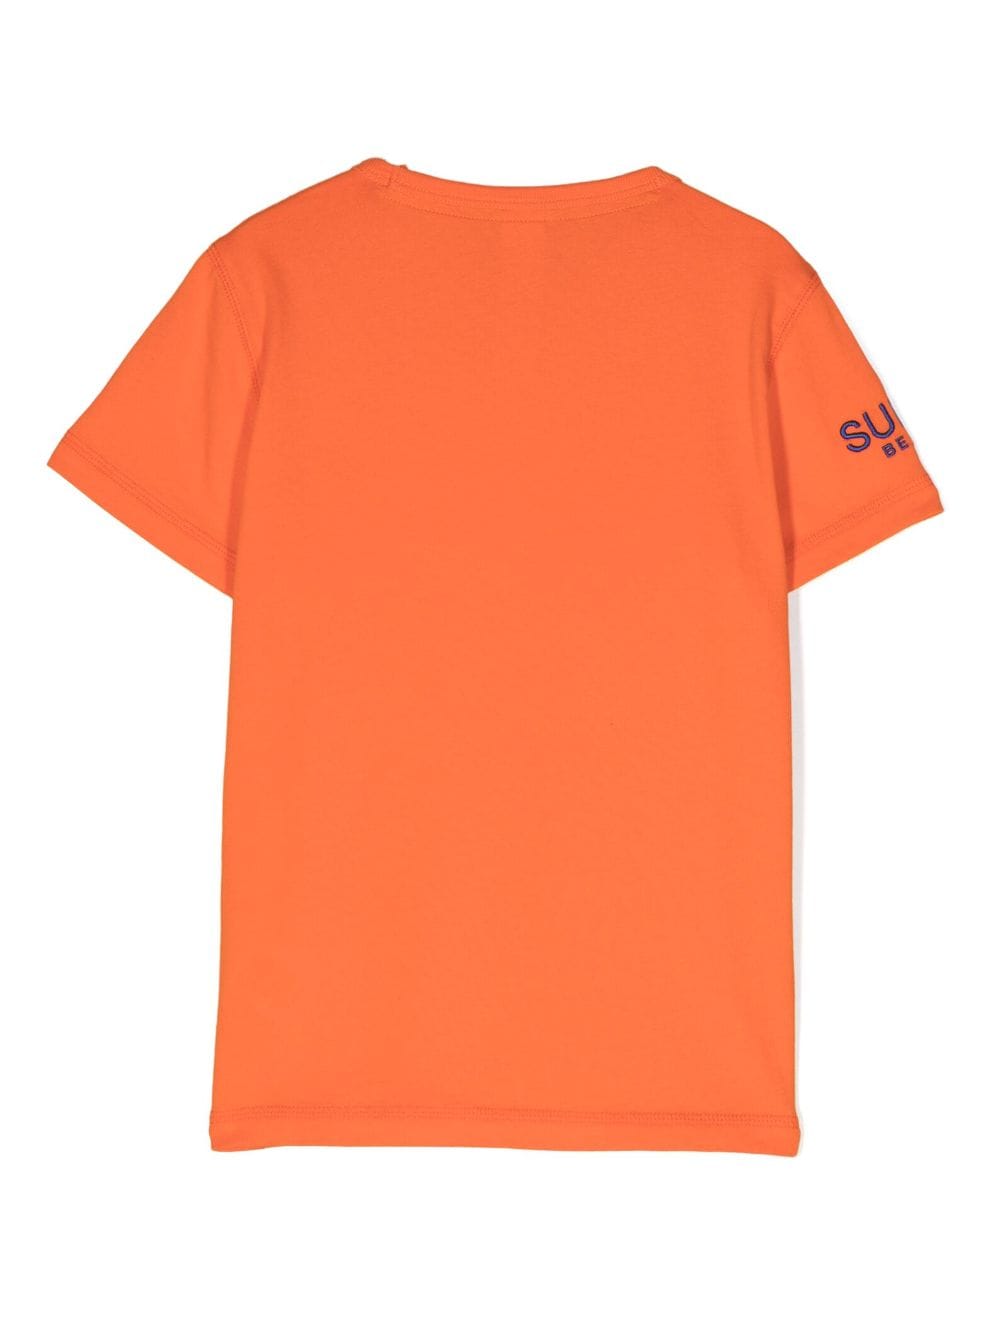 Sun 68 Katoenen T-shirt - Oranje